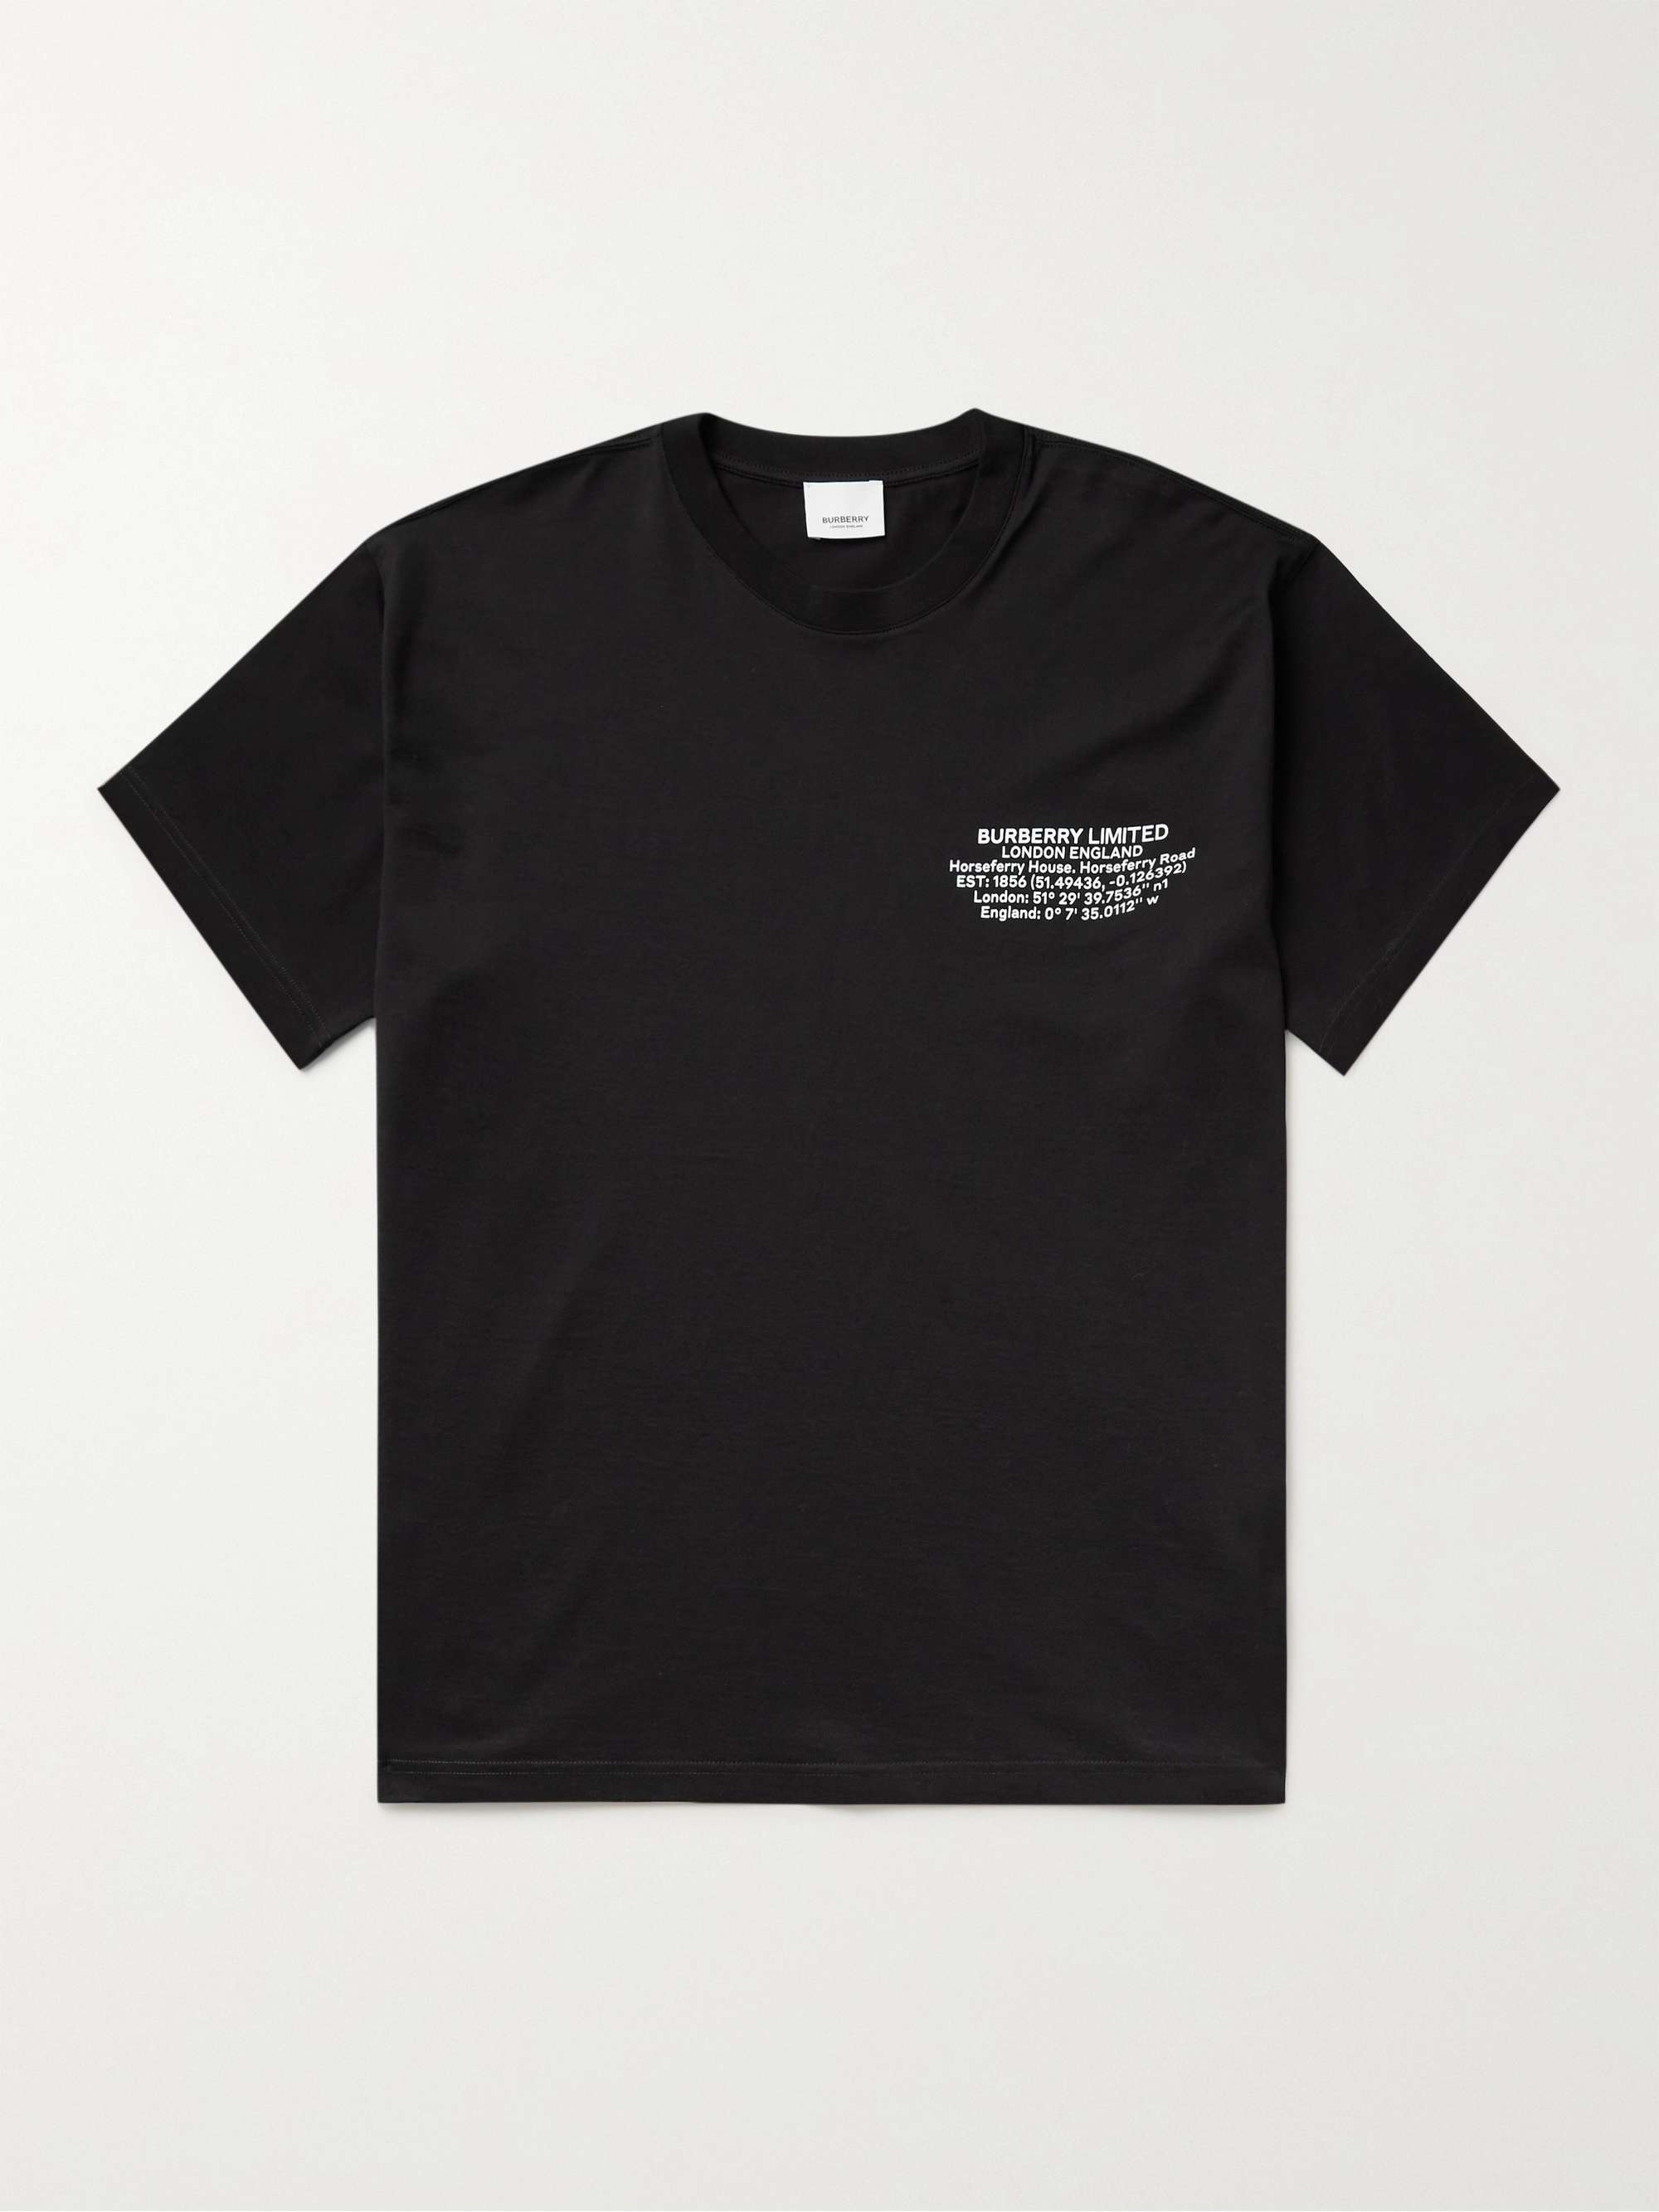 Black Logo-Print Cotton-Jersey T-Shirt | BURBERRY | MR PORTER